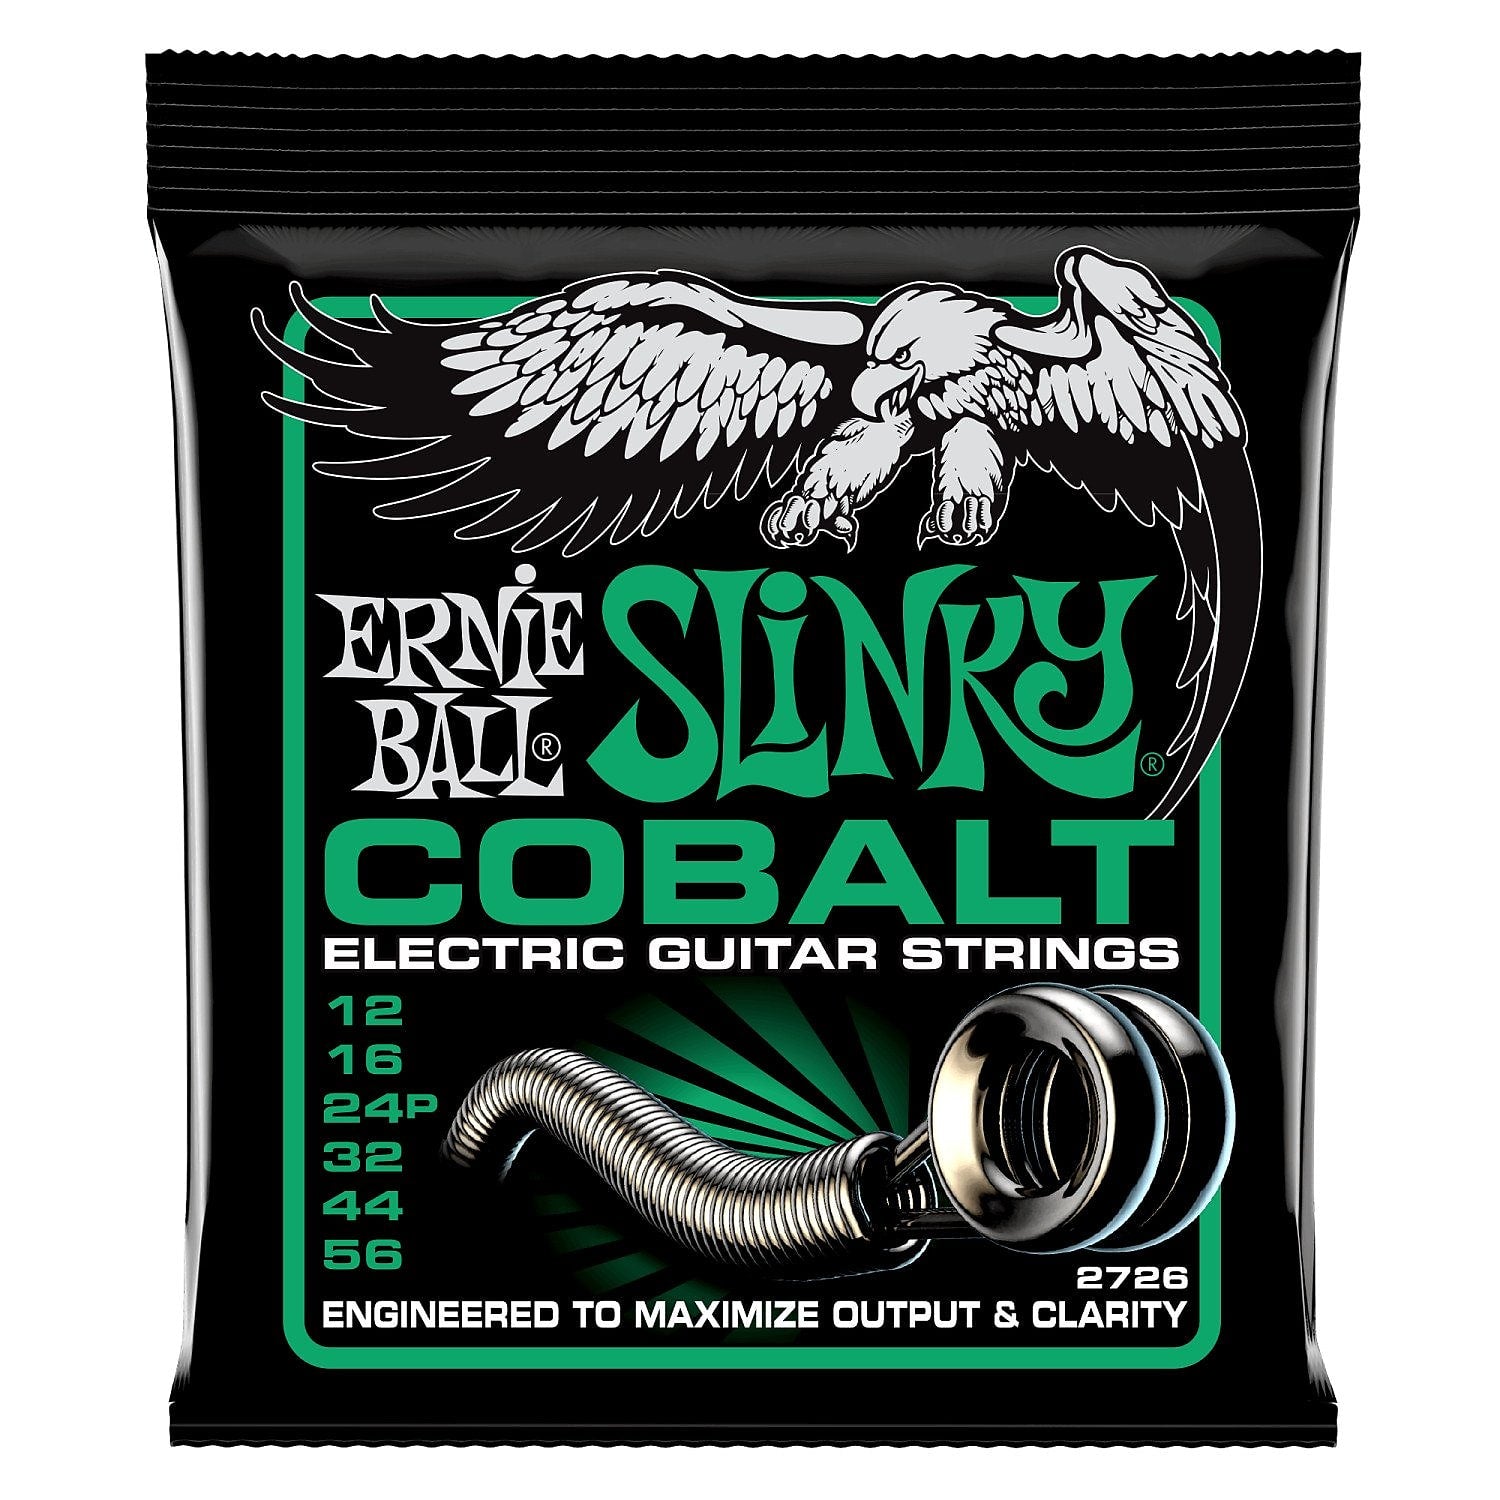 Ernie Ball 2726 Not Even Slinky Cobalt Electric Guitar Strings - 12-56 Gauge